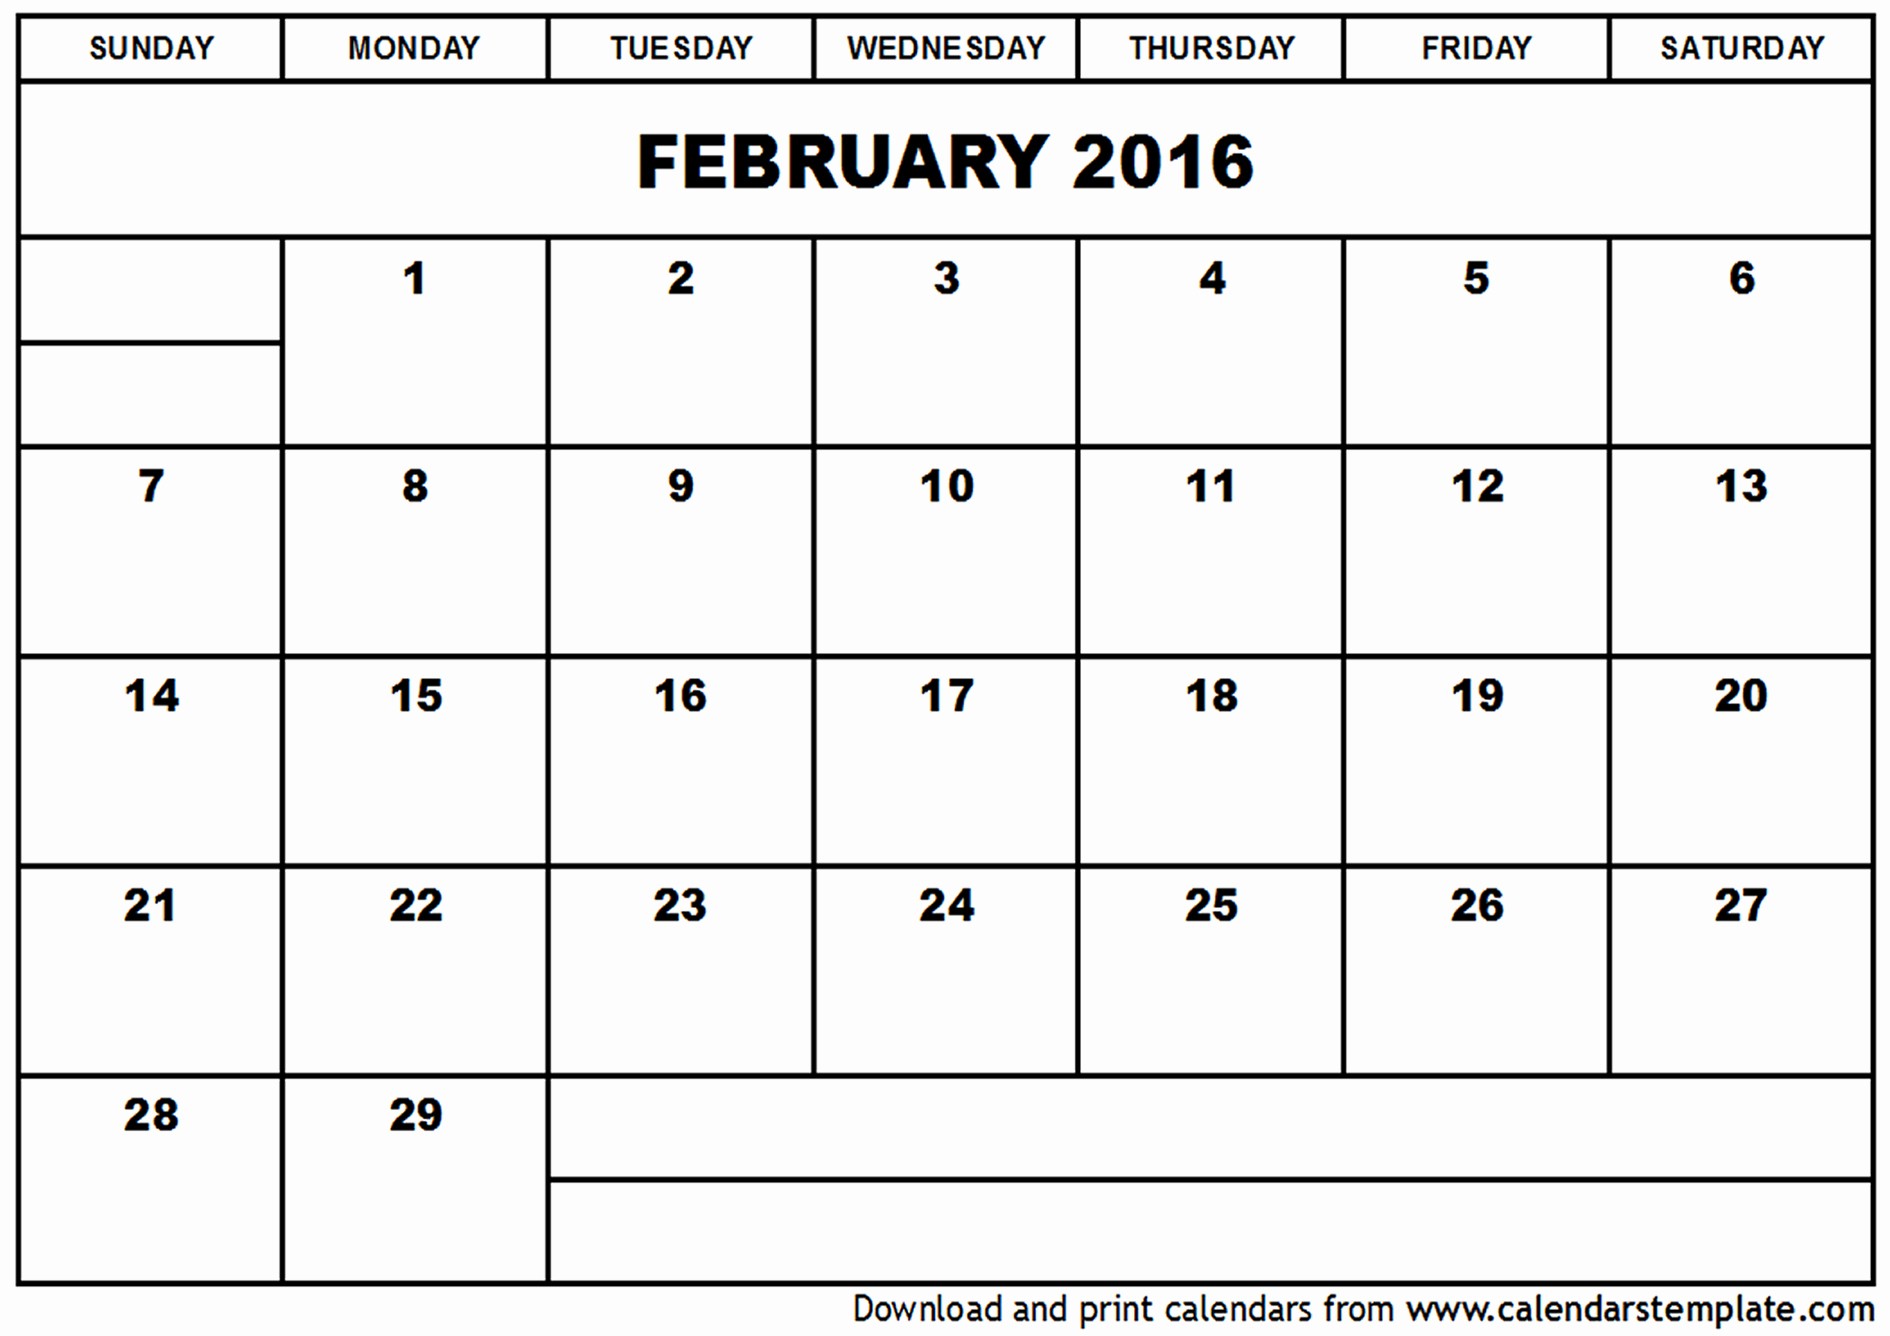 Free Printable Calendar 2016 Template Lovely February 2016 Calendar Template